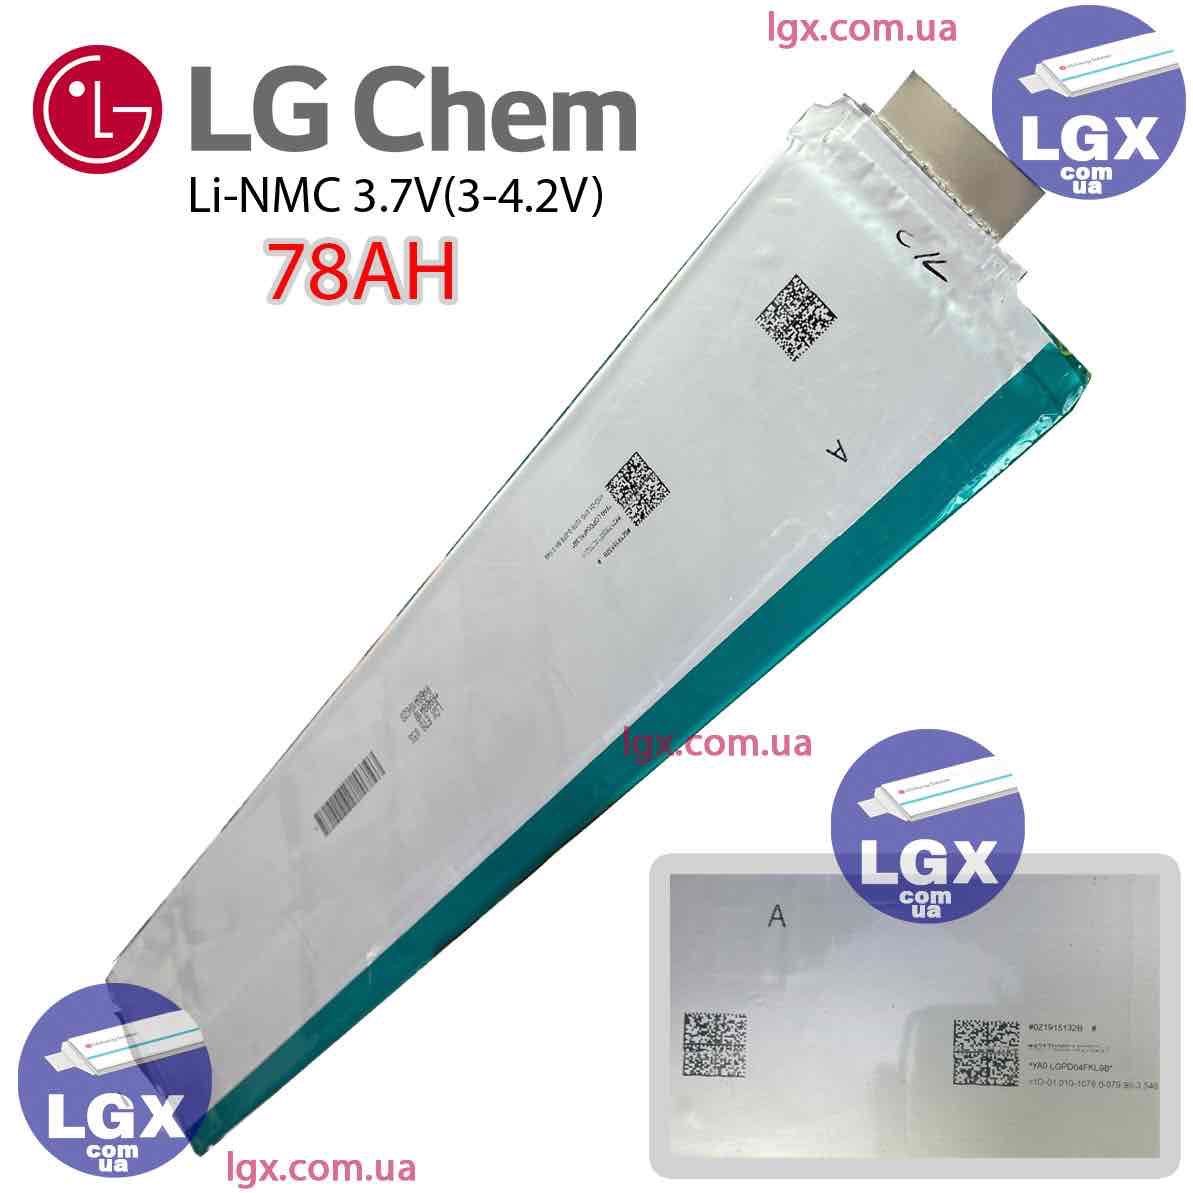 Аккумуляторный елемент LG-Chem LGX-e78 химия NMC 3.6v (пакет) емкость 78А/Ч разряд 3-5c 2000 циклов 1180грам